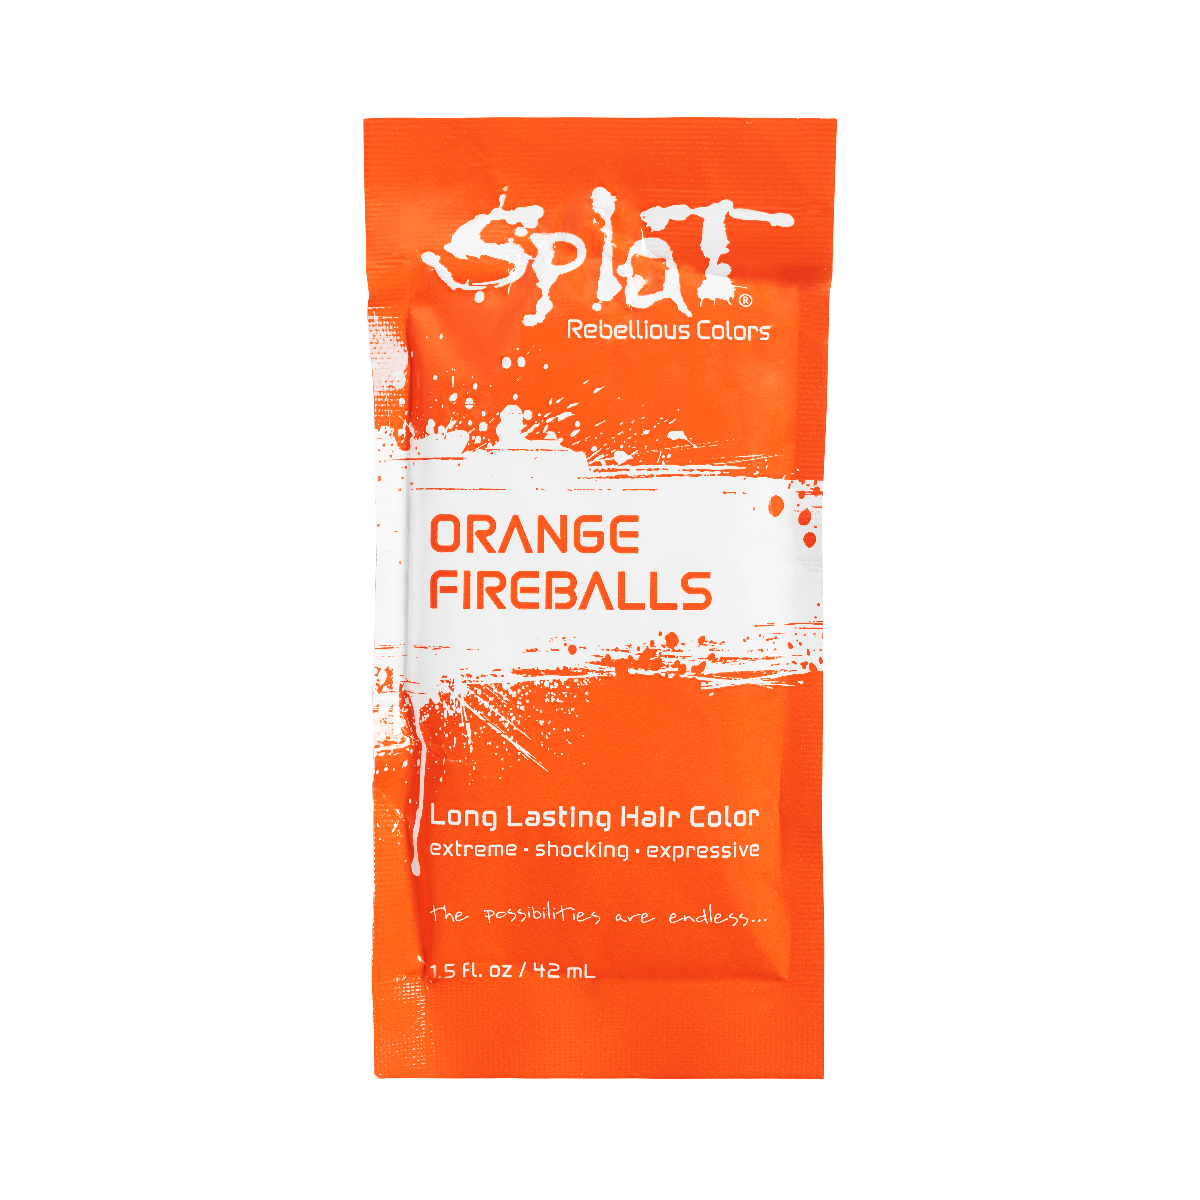 Splat Hair Dye Original Singles Foil Packet in Orange Fireballs Orange Semi-Permanent Hair Dye